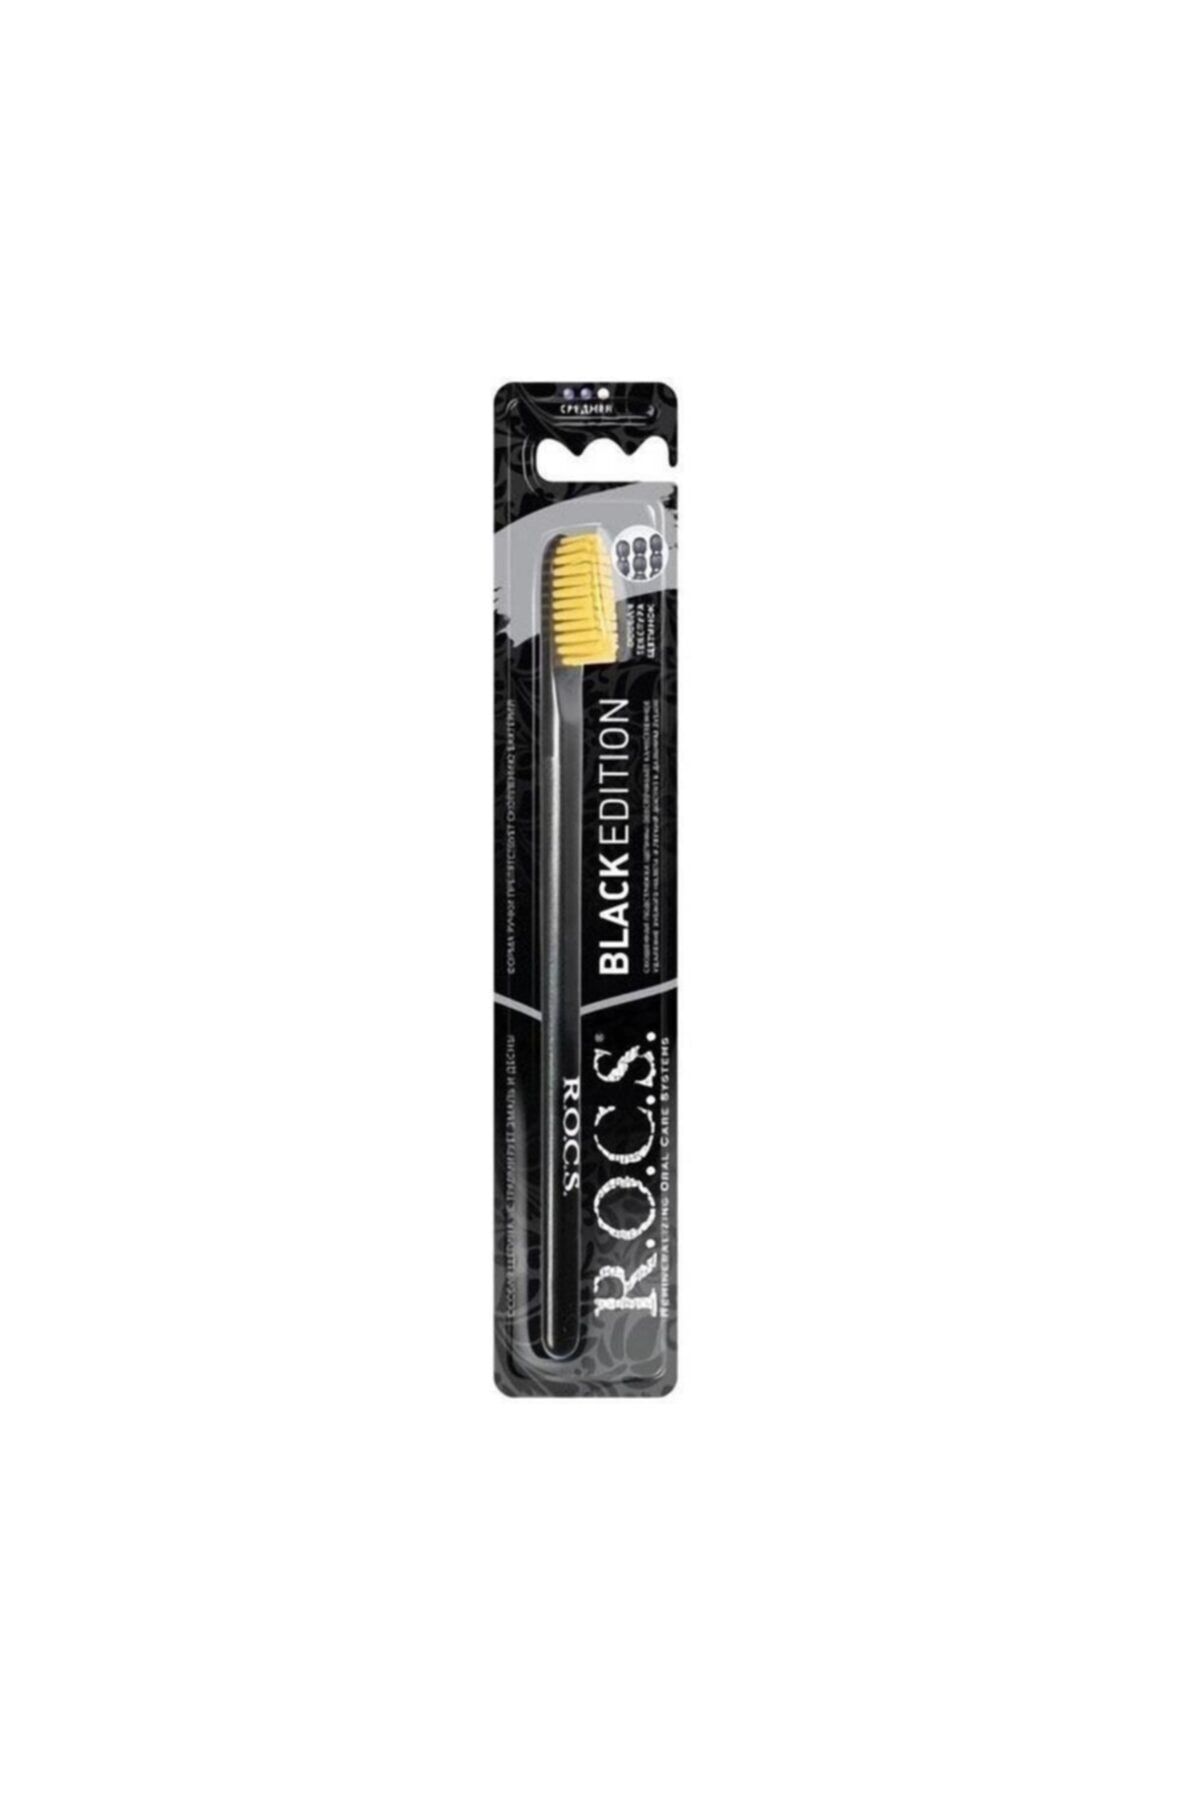 R.O.C.S. Black Edition Diş Fırçası - Orta Sarı Kıl